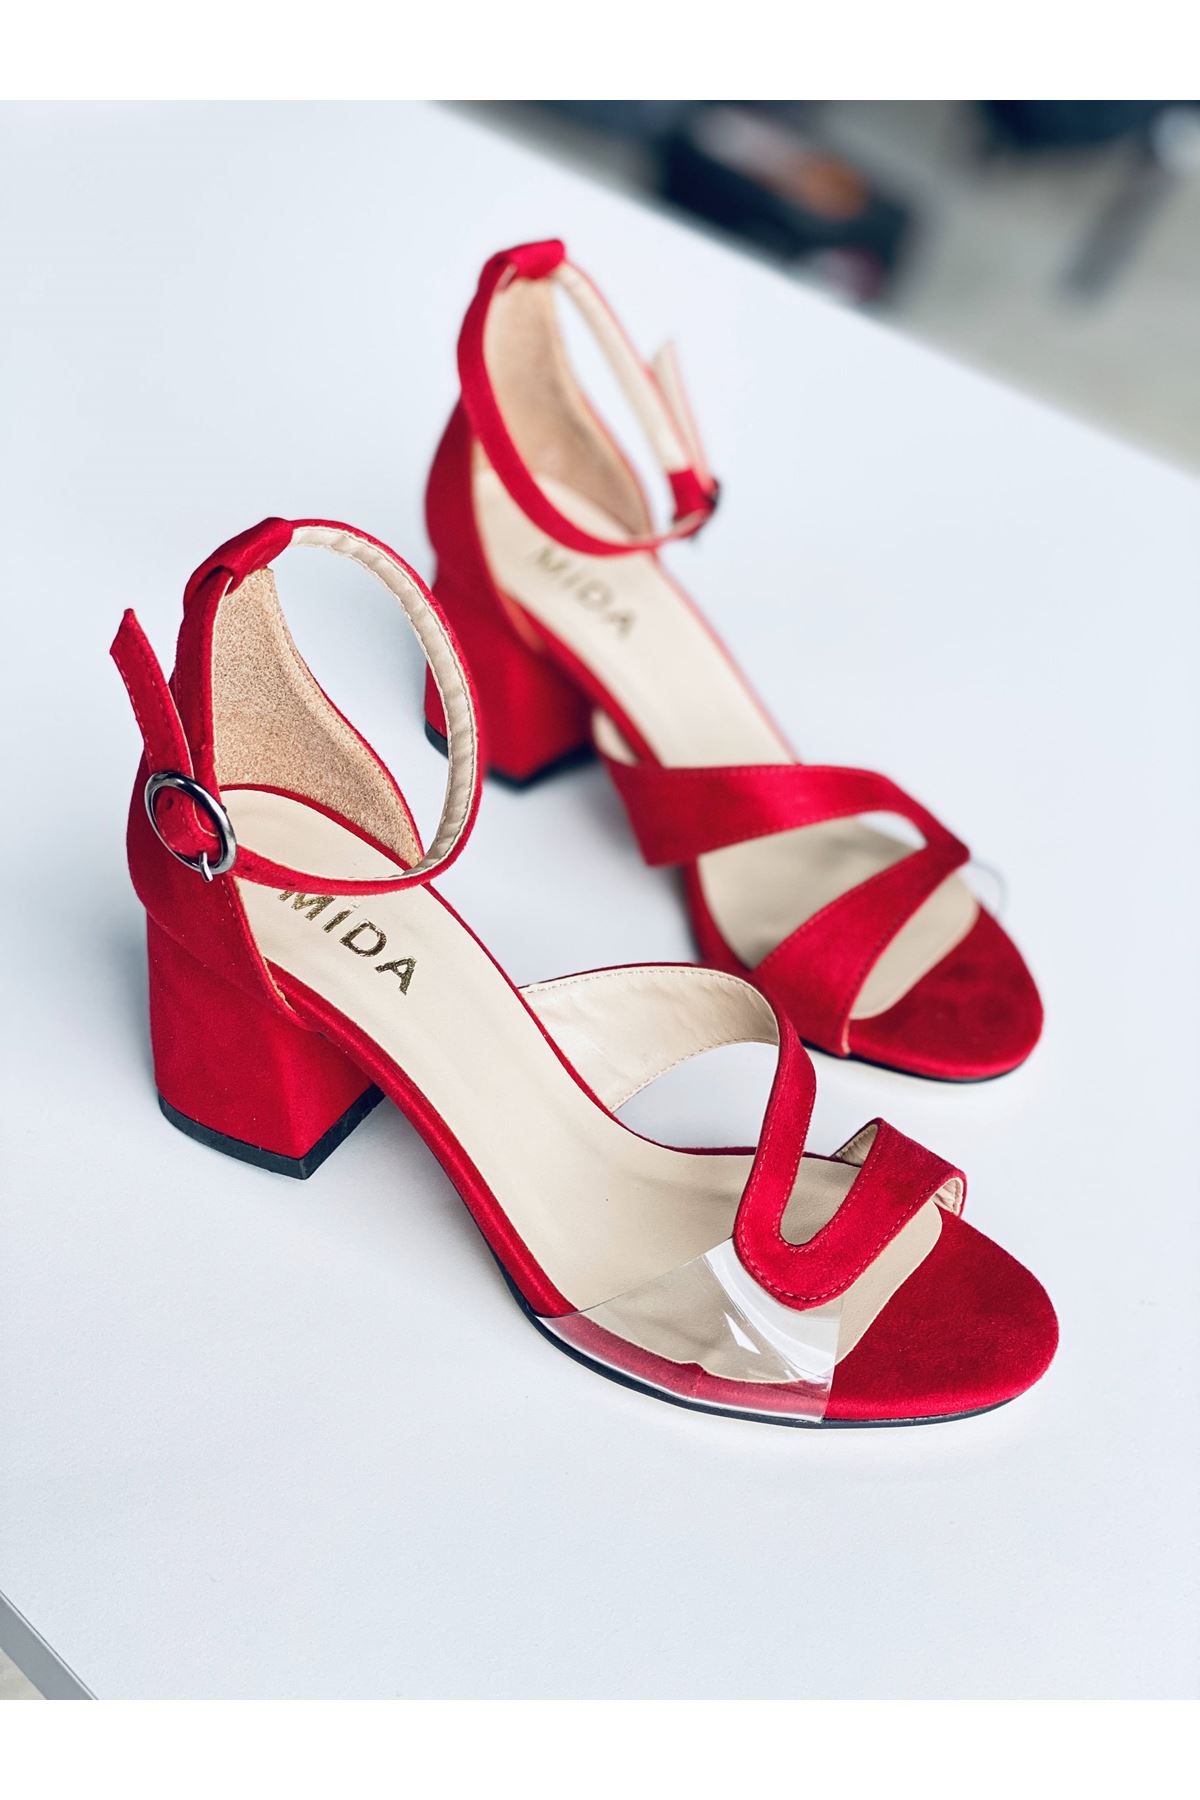 Mida Shoes Y610 Kırmızı Suet Topuklu Ayakkabı